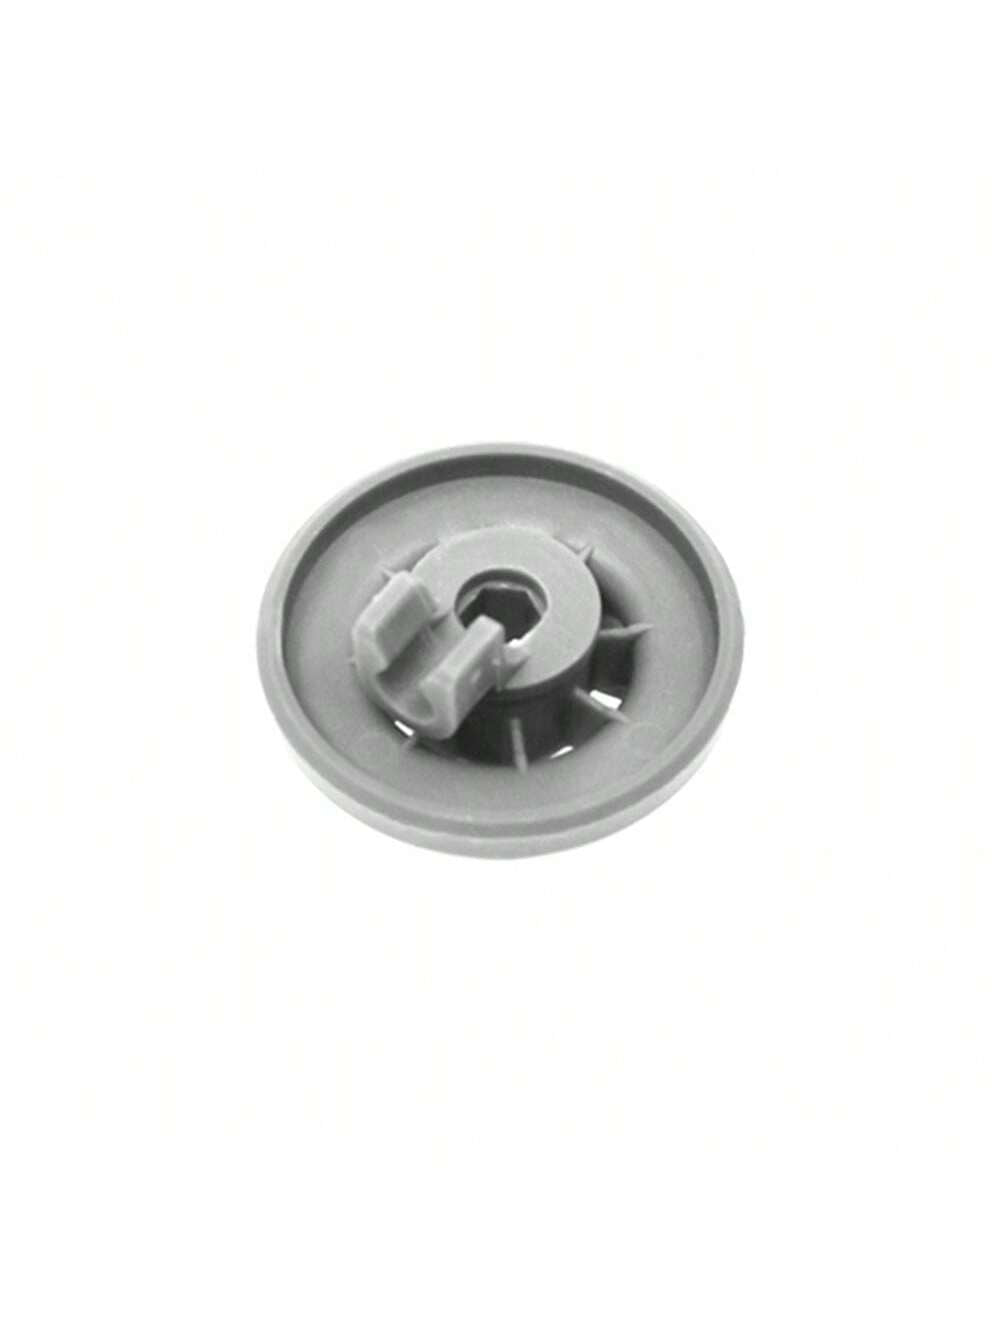 ( 8 Pack )165314 Dishwasher Lower Rack Wheels UPGRADED Fit For Bosch Kenmore Dishwasher 165314 Dishwasher Wheels Replace 420198 AP2802428 PS3439123 423232 EAP3439123 PS8697067 Dishwasher Rack Number-Grey-7